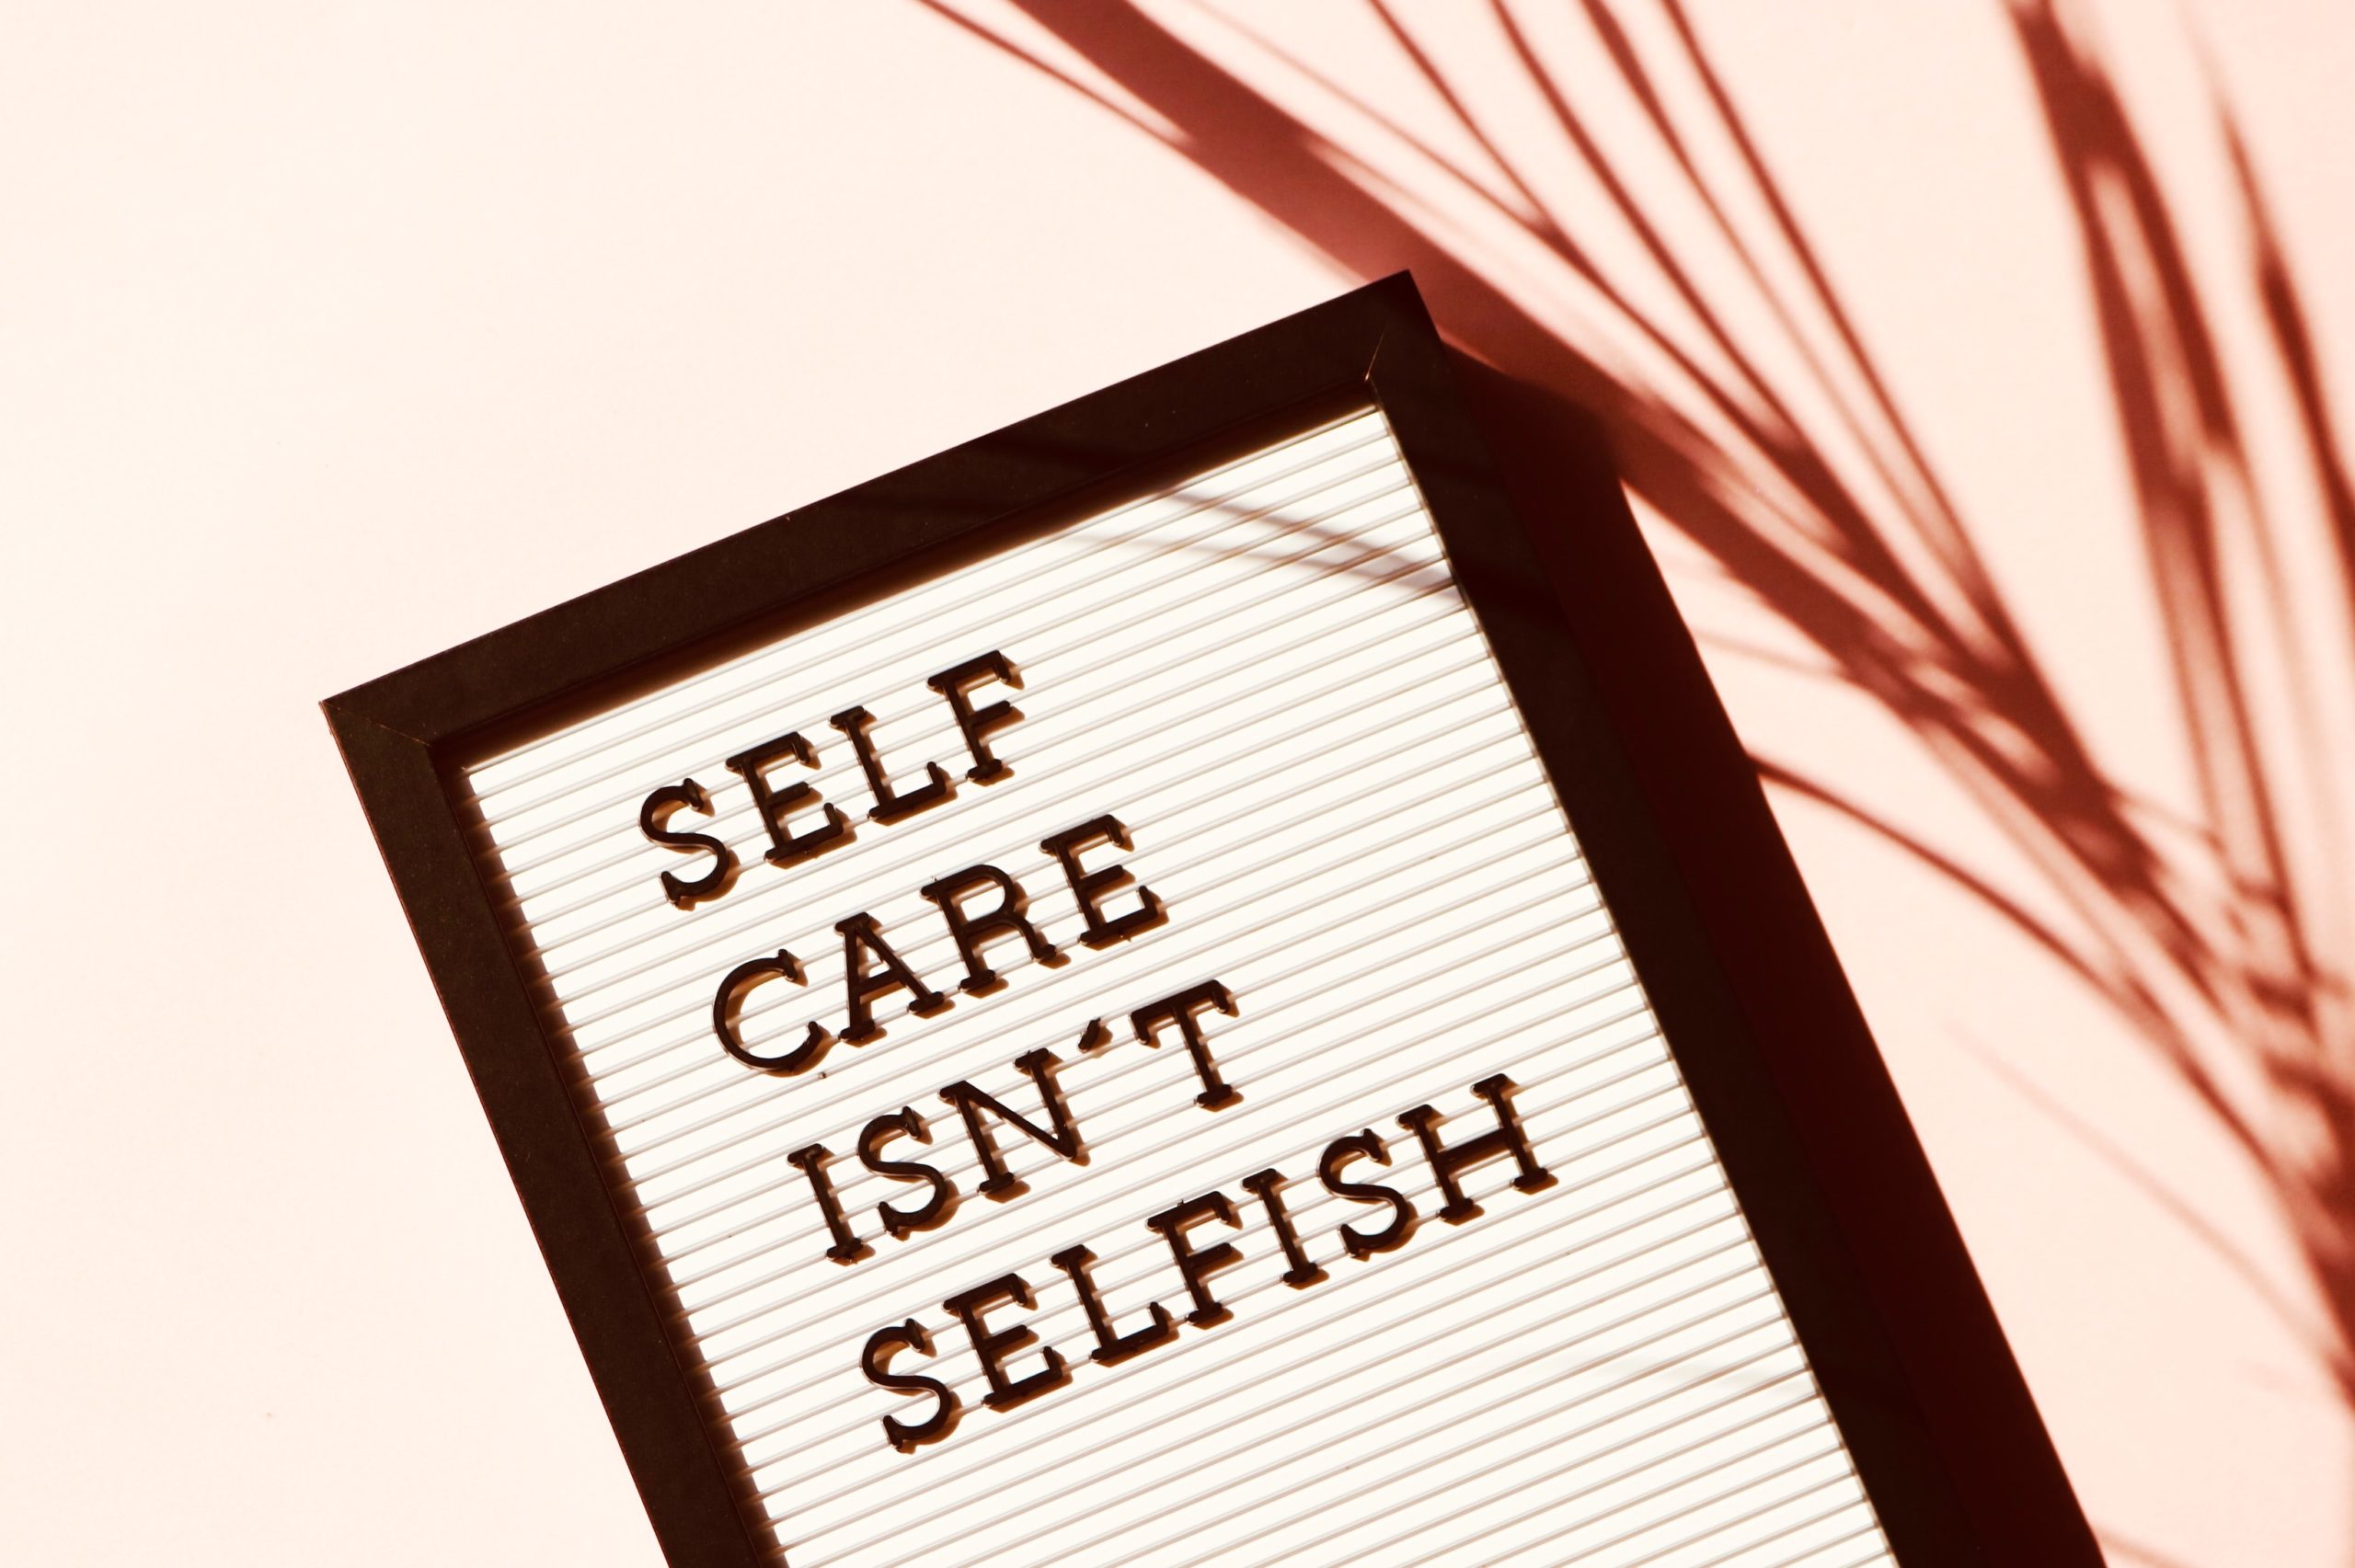 <img src="self.jpg" alt="self care isn't selfish board"/> 